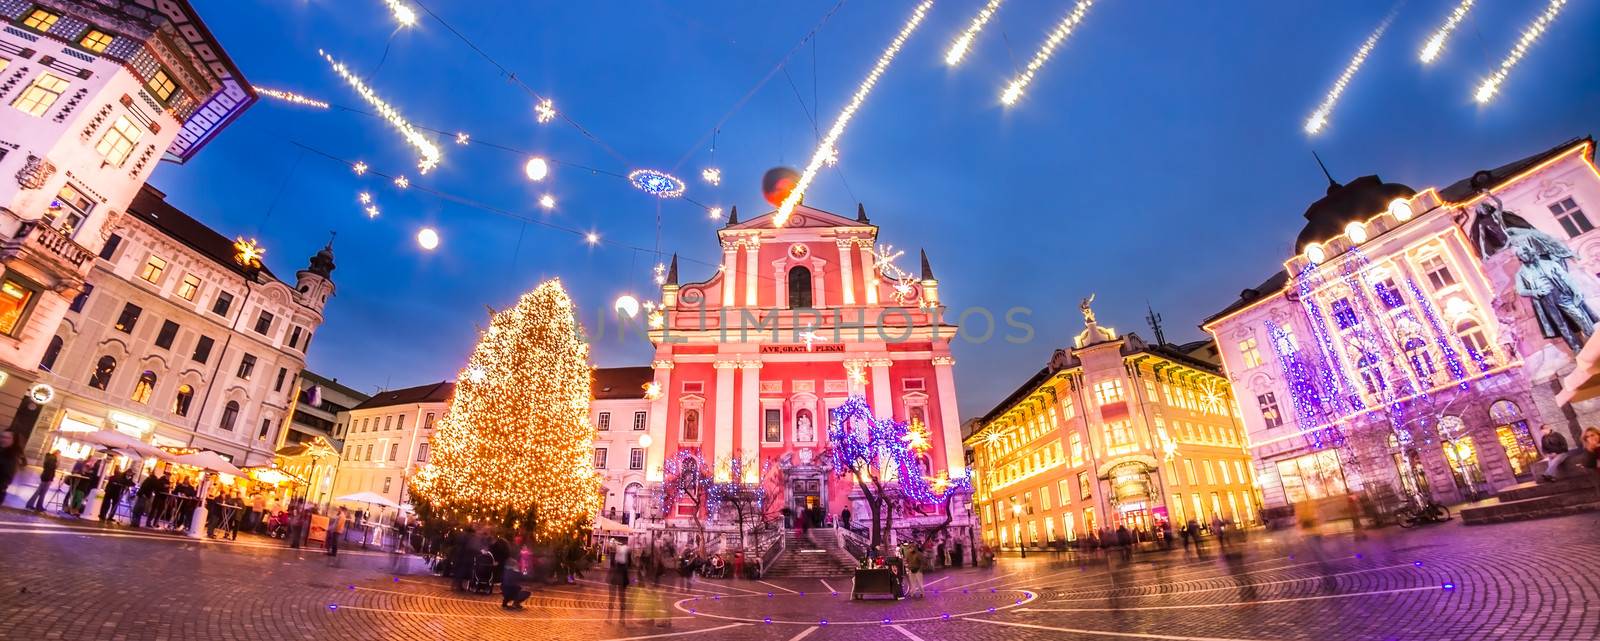 Romantic Ljubljana's city center  decorated for Christmas fairytale. Preseren's square, Ljubljana, Slovenia, Europe.